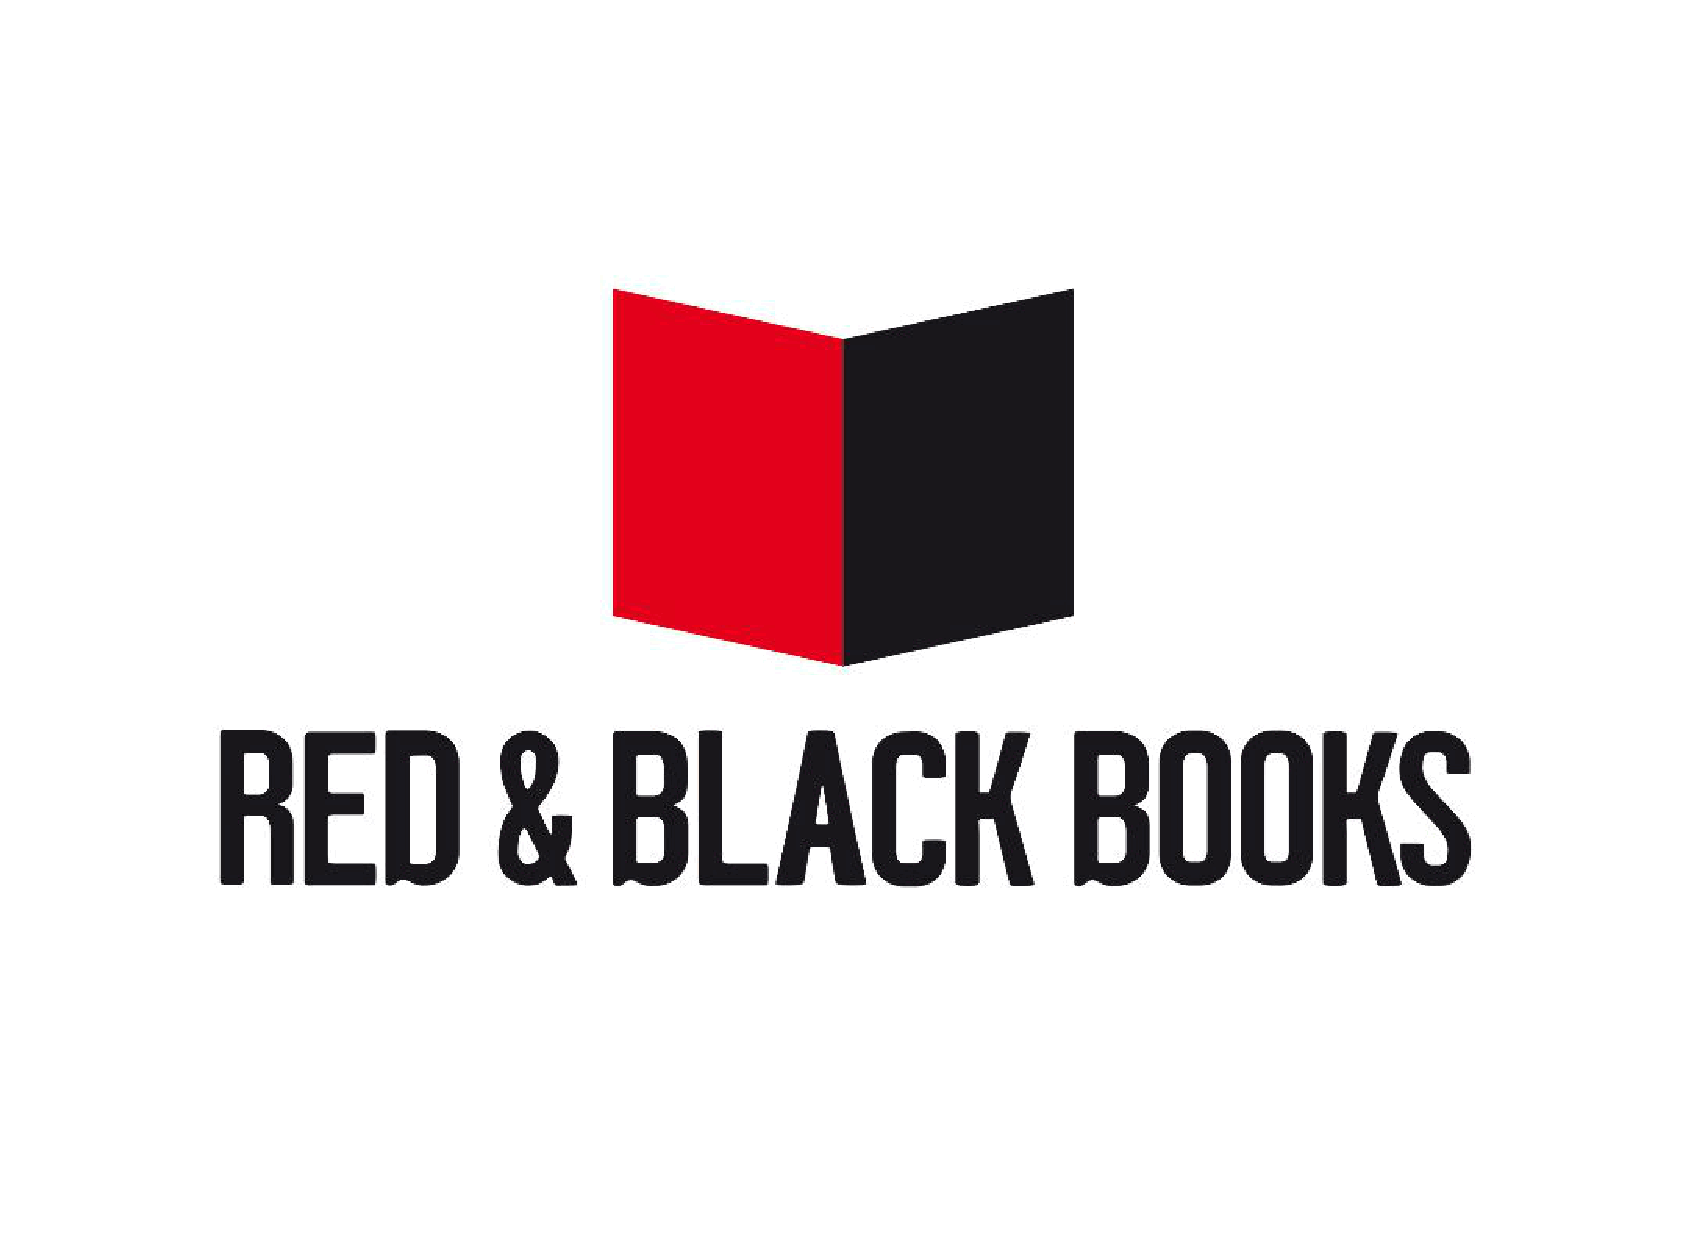 Red & Black Books - Red & Black Books